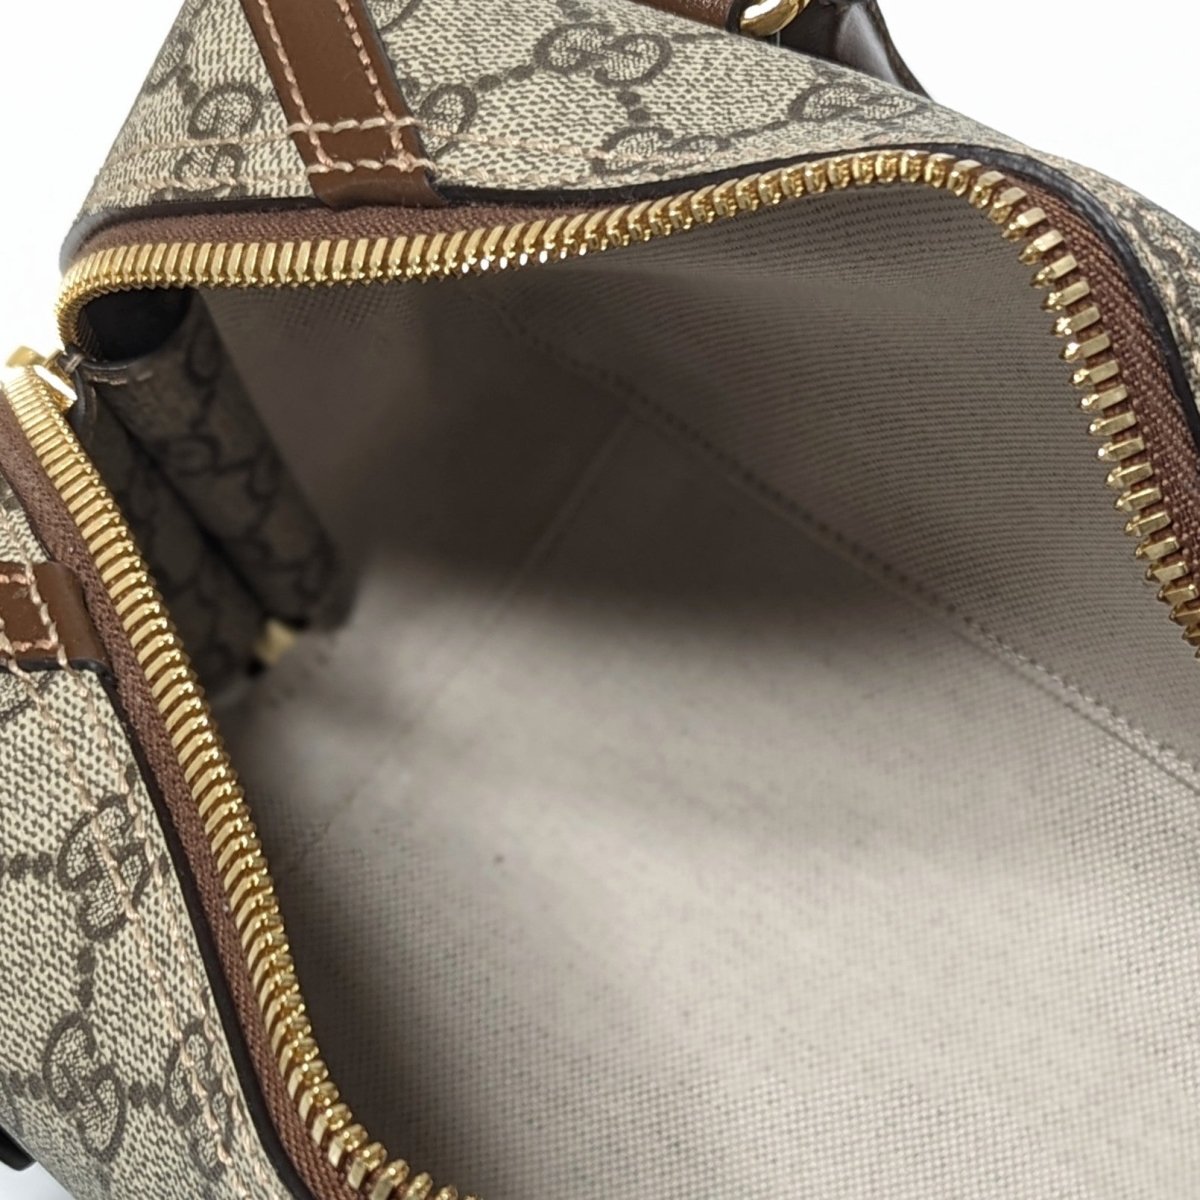 Gucci Interlocking G Small Duffle Bag